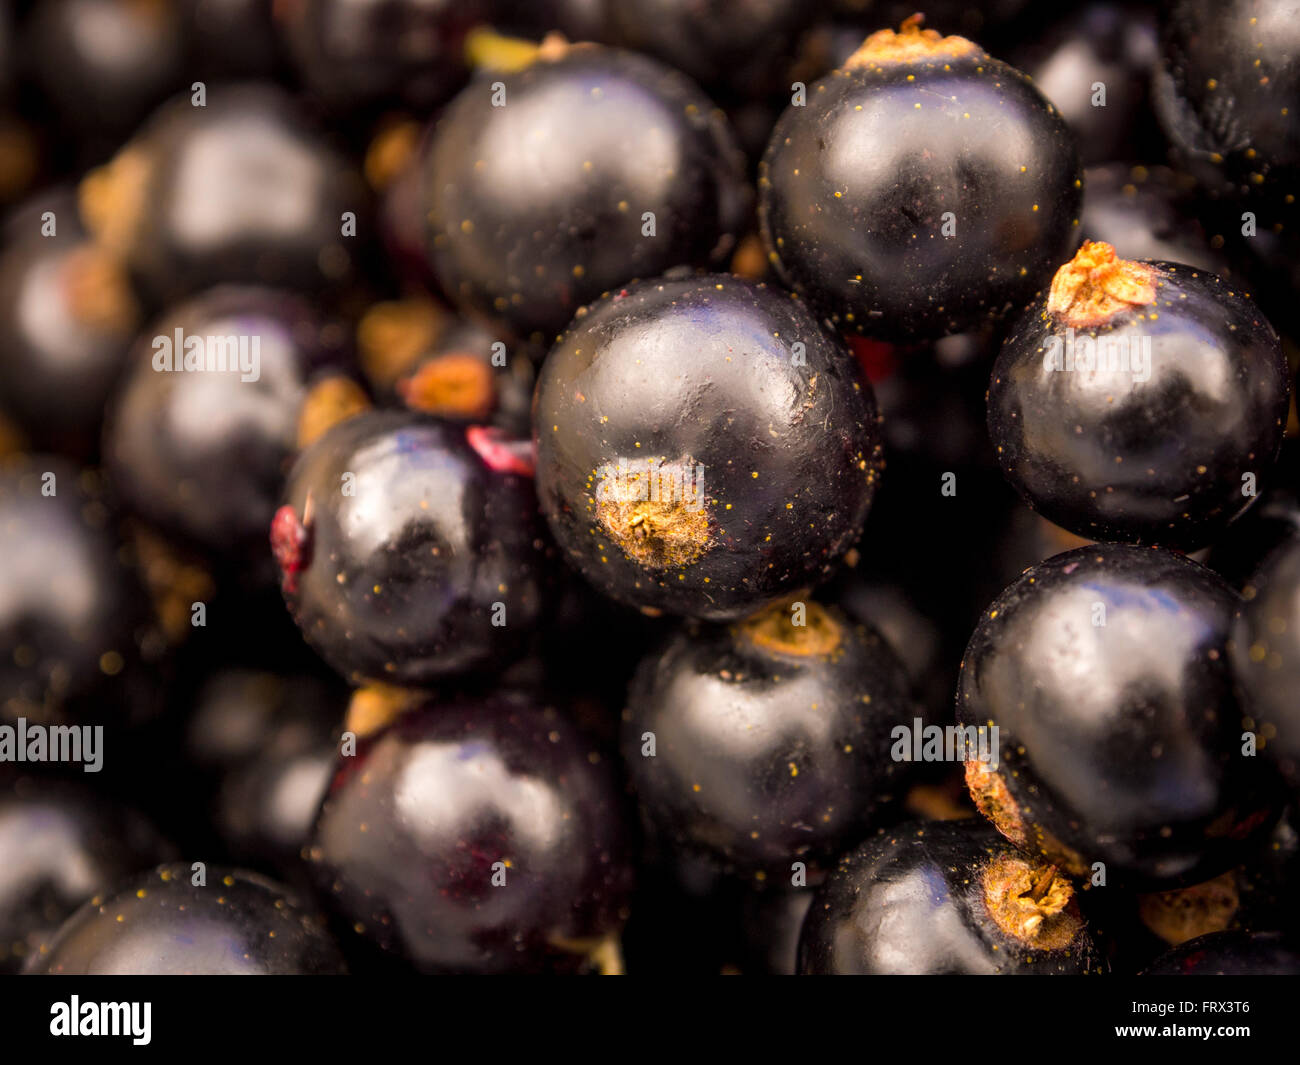 Blackcurrants - close up Stock Photo